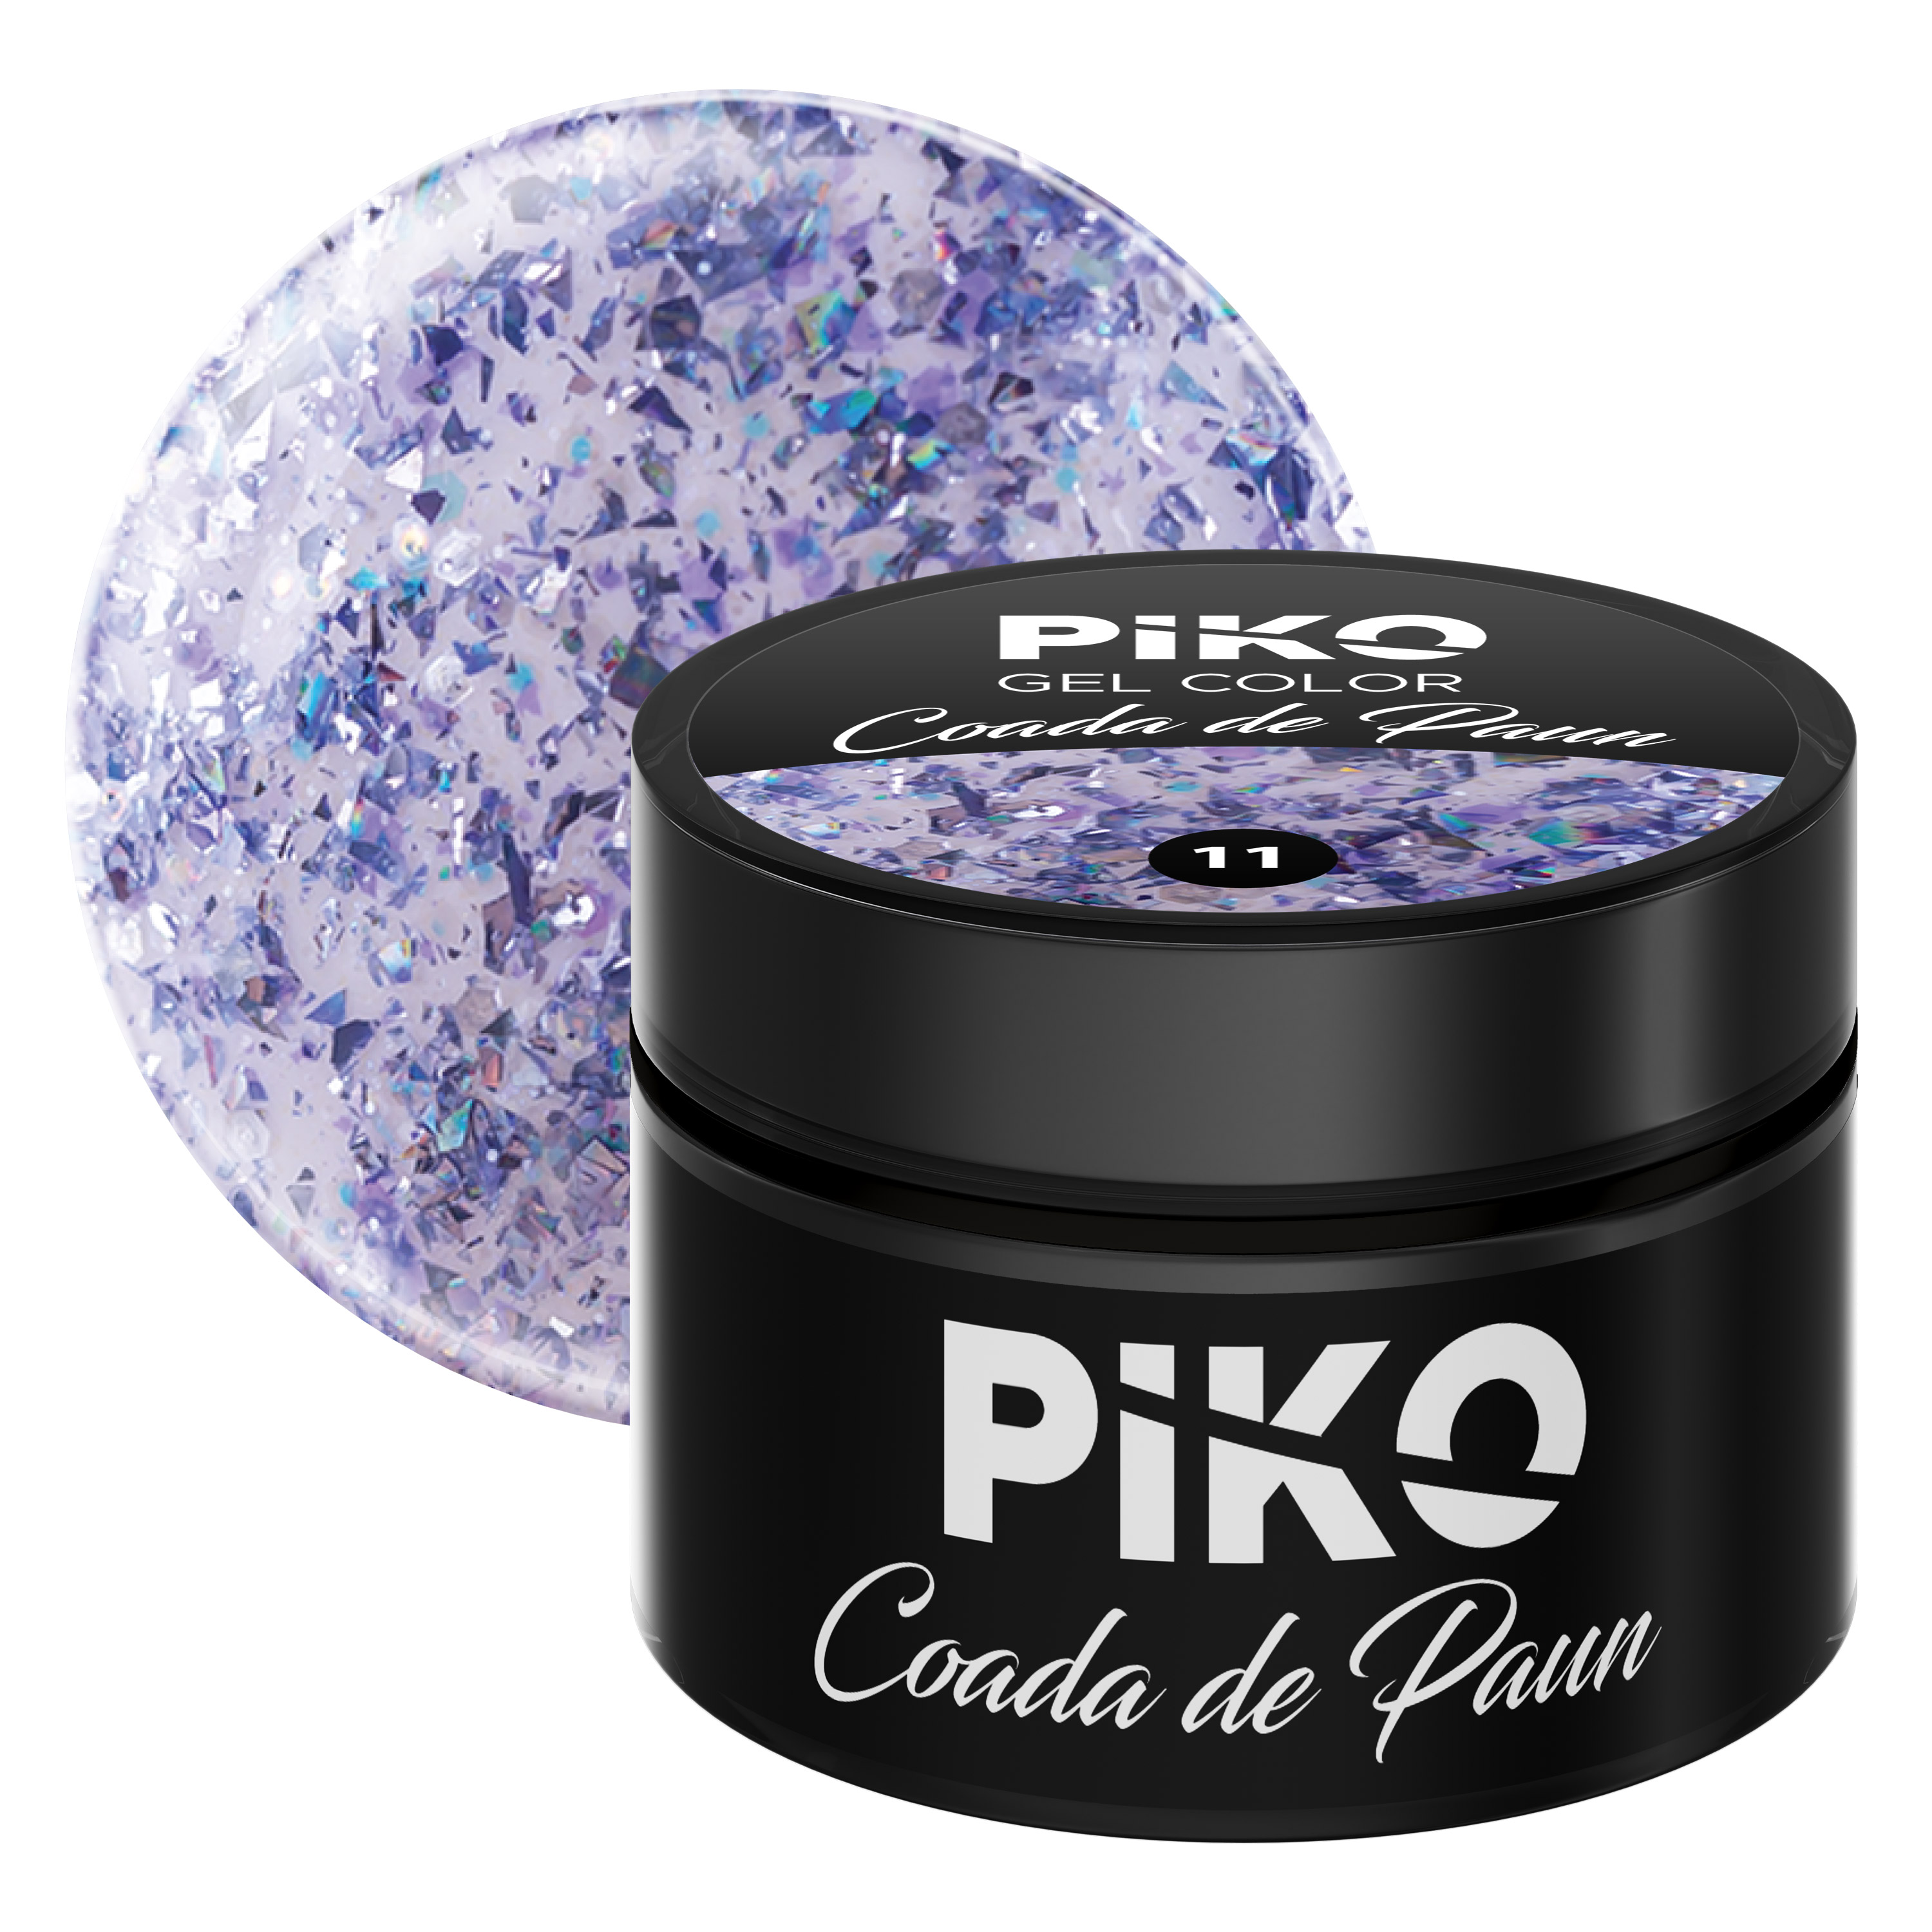 Gel UV color Piko, Coada de paun, 5g, model 11